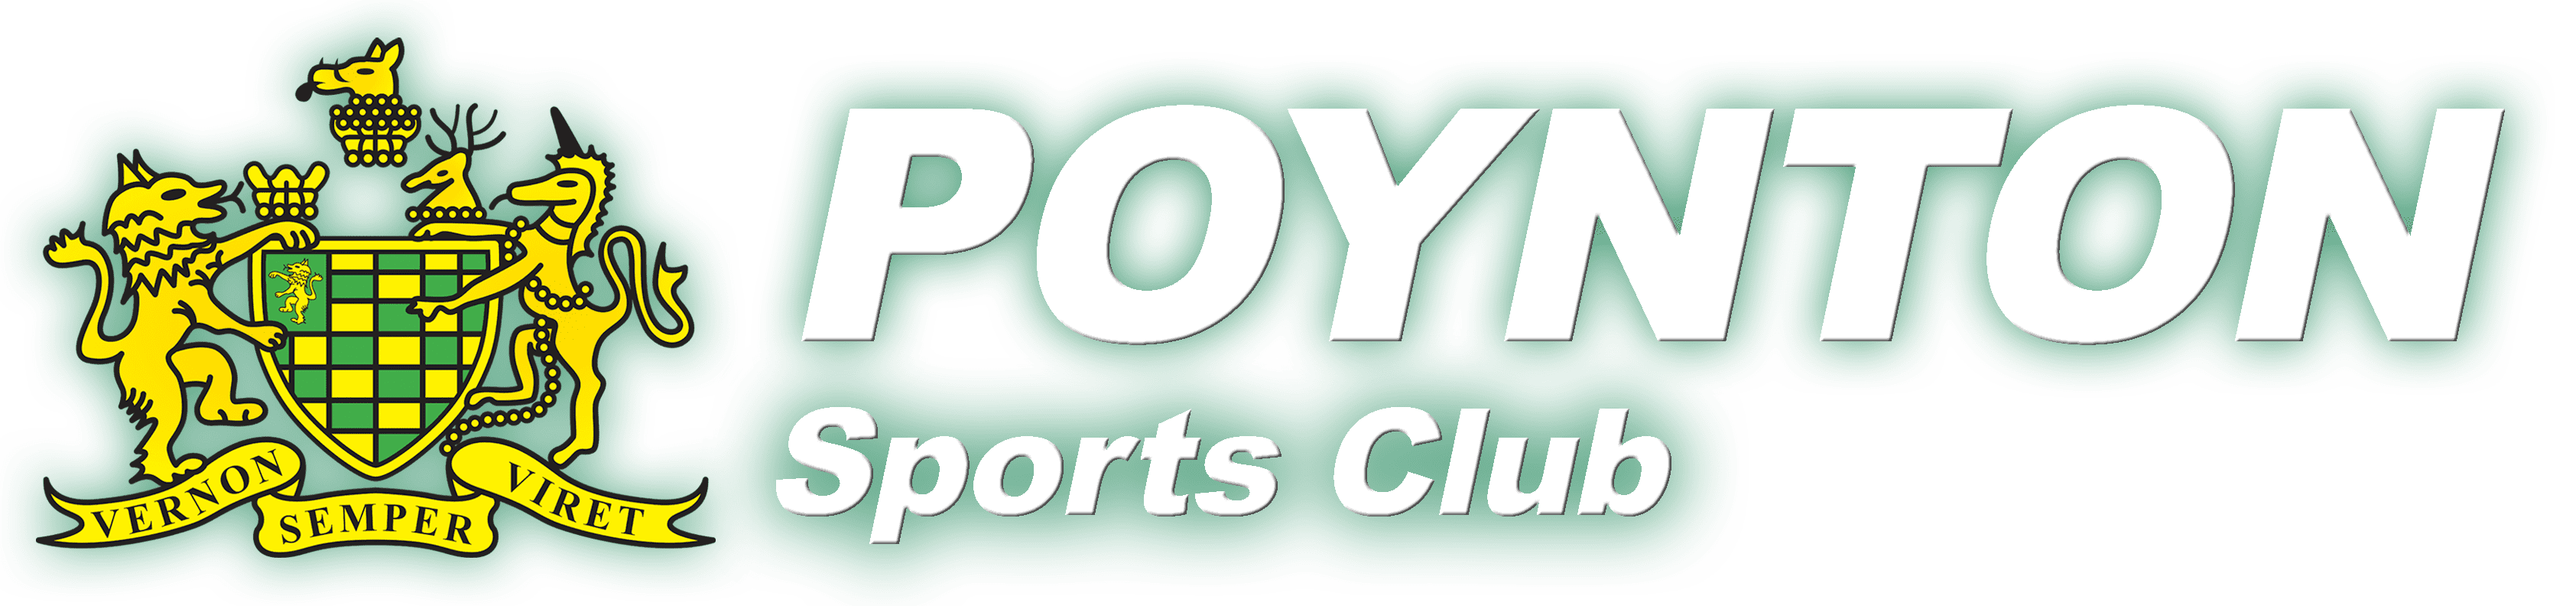 Poynton Sports Club logo marque in Yellow 2022